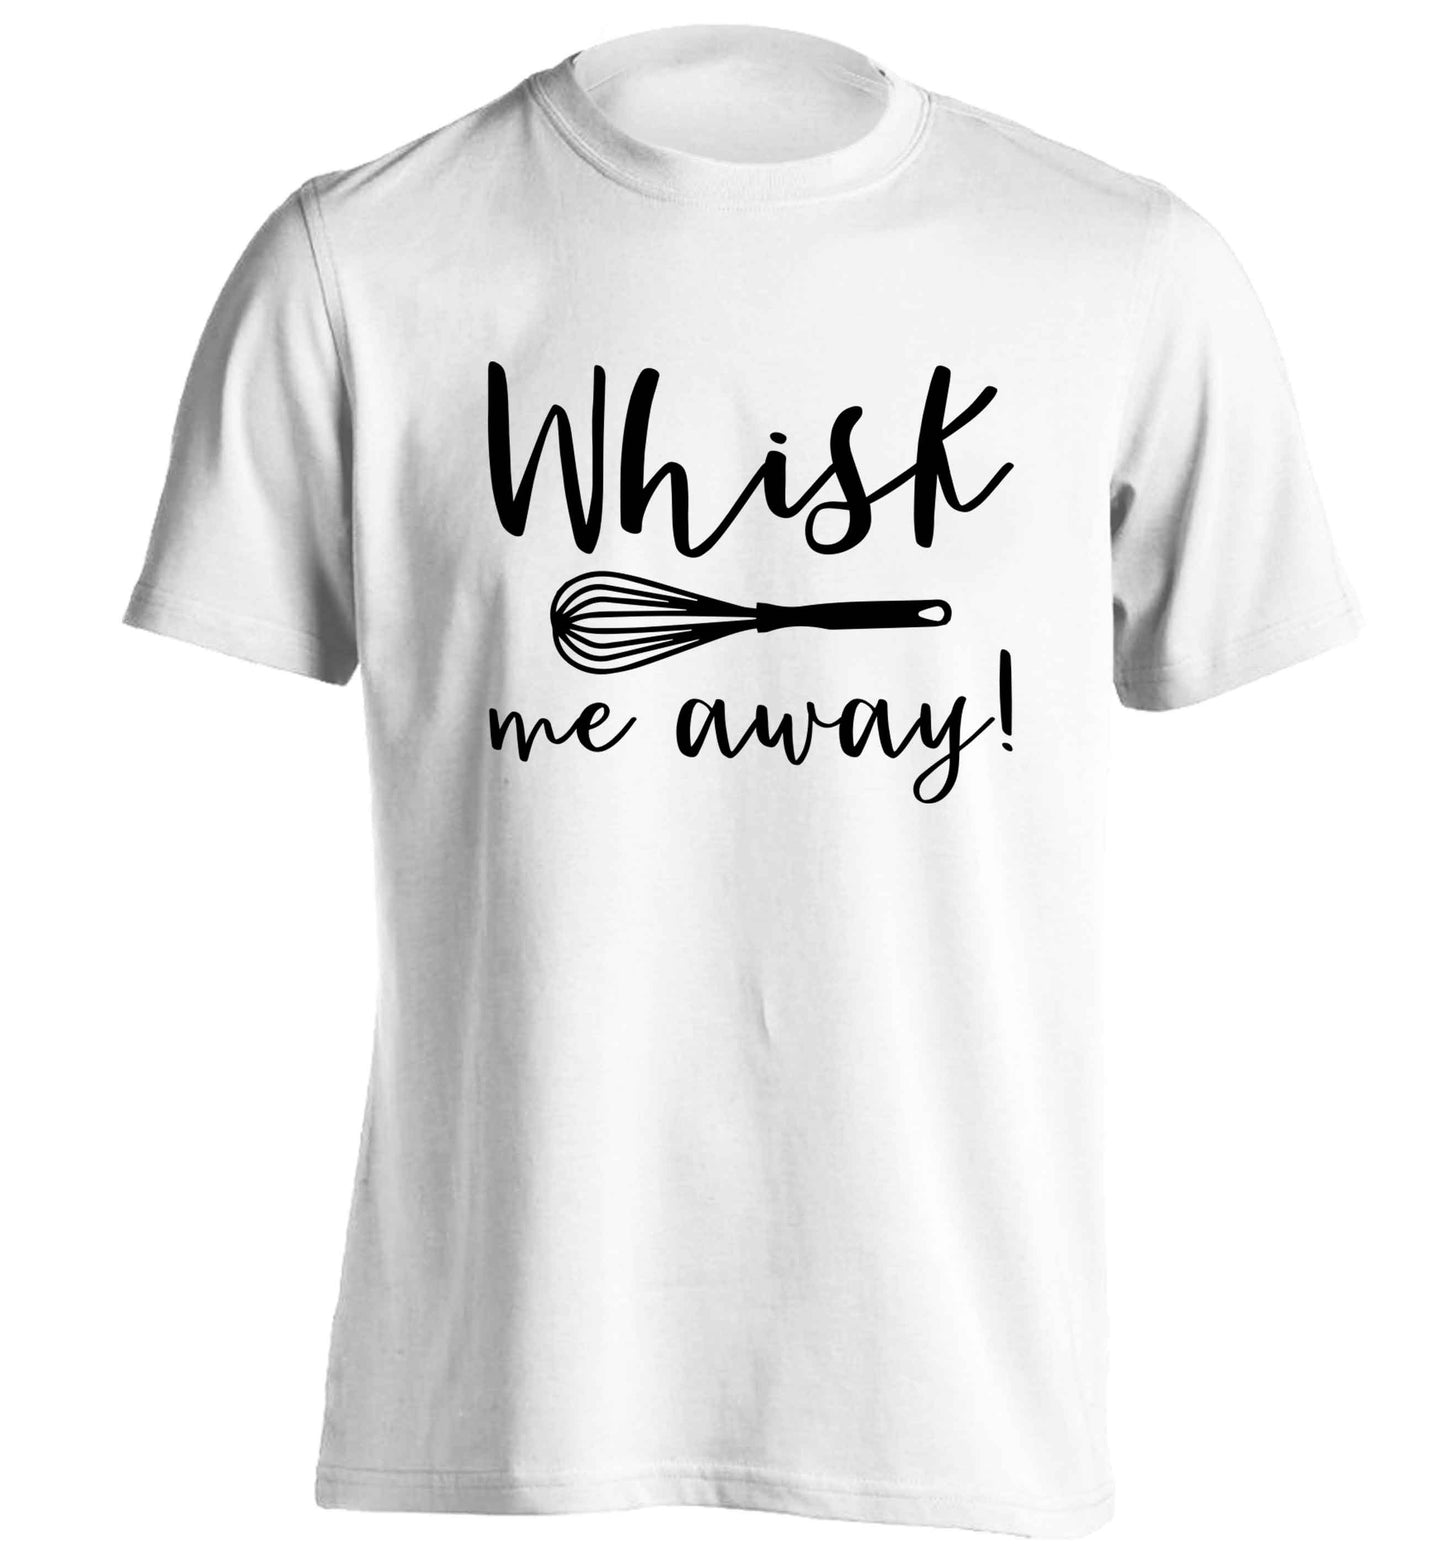 Whisk me away adults unisex white Tshirt 2XL